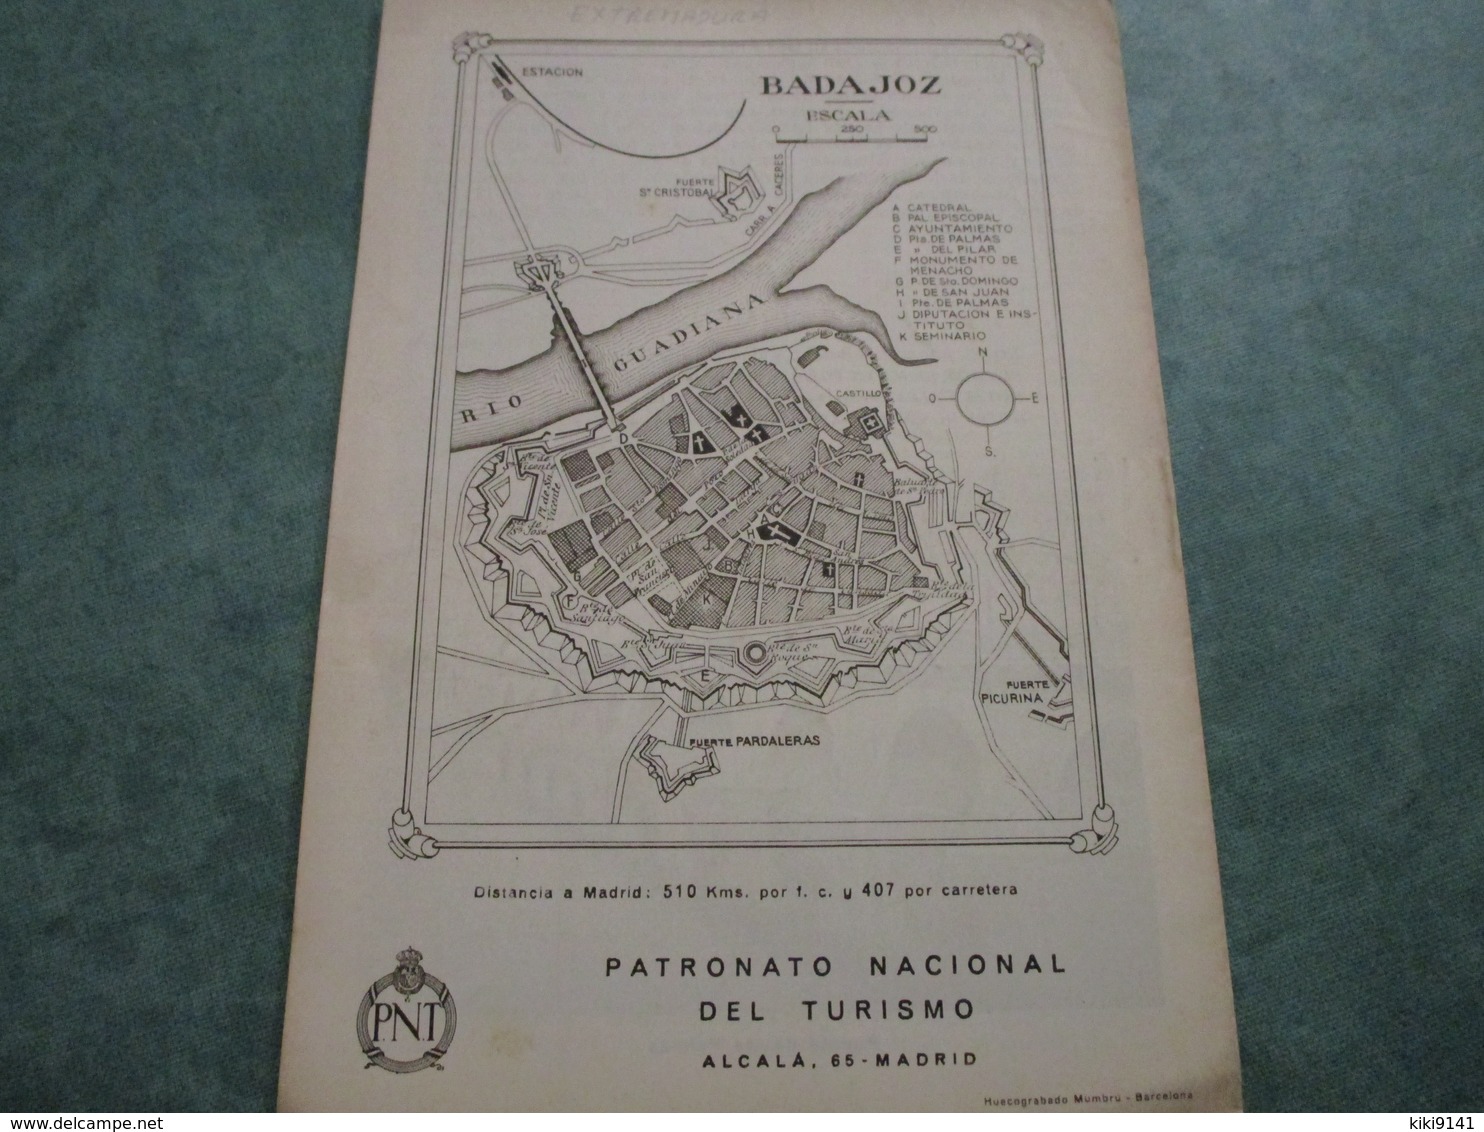 PATRONATO NATIONAL DEL TURISMO (8 Pages Illustrées) - Badajoz